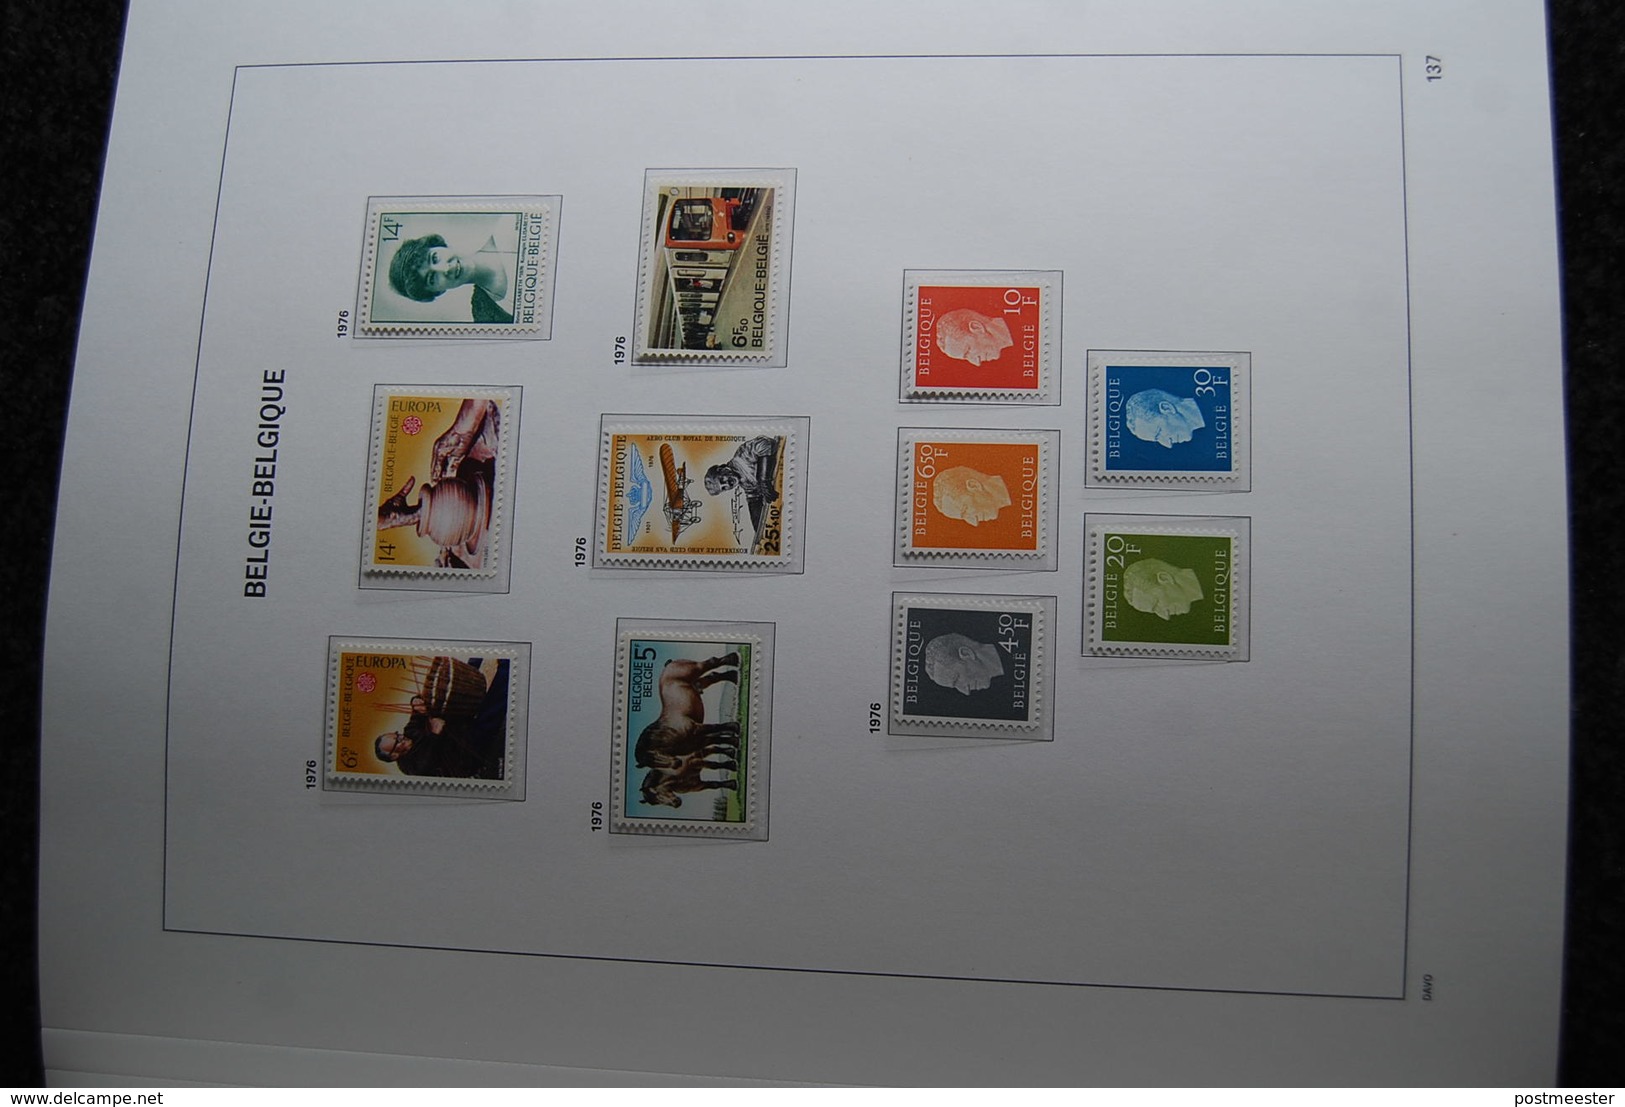 Verzameling België postfris in Davo Luxe album